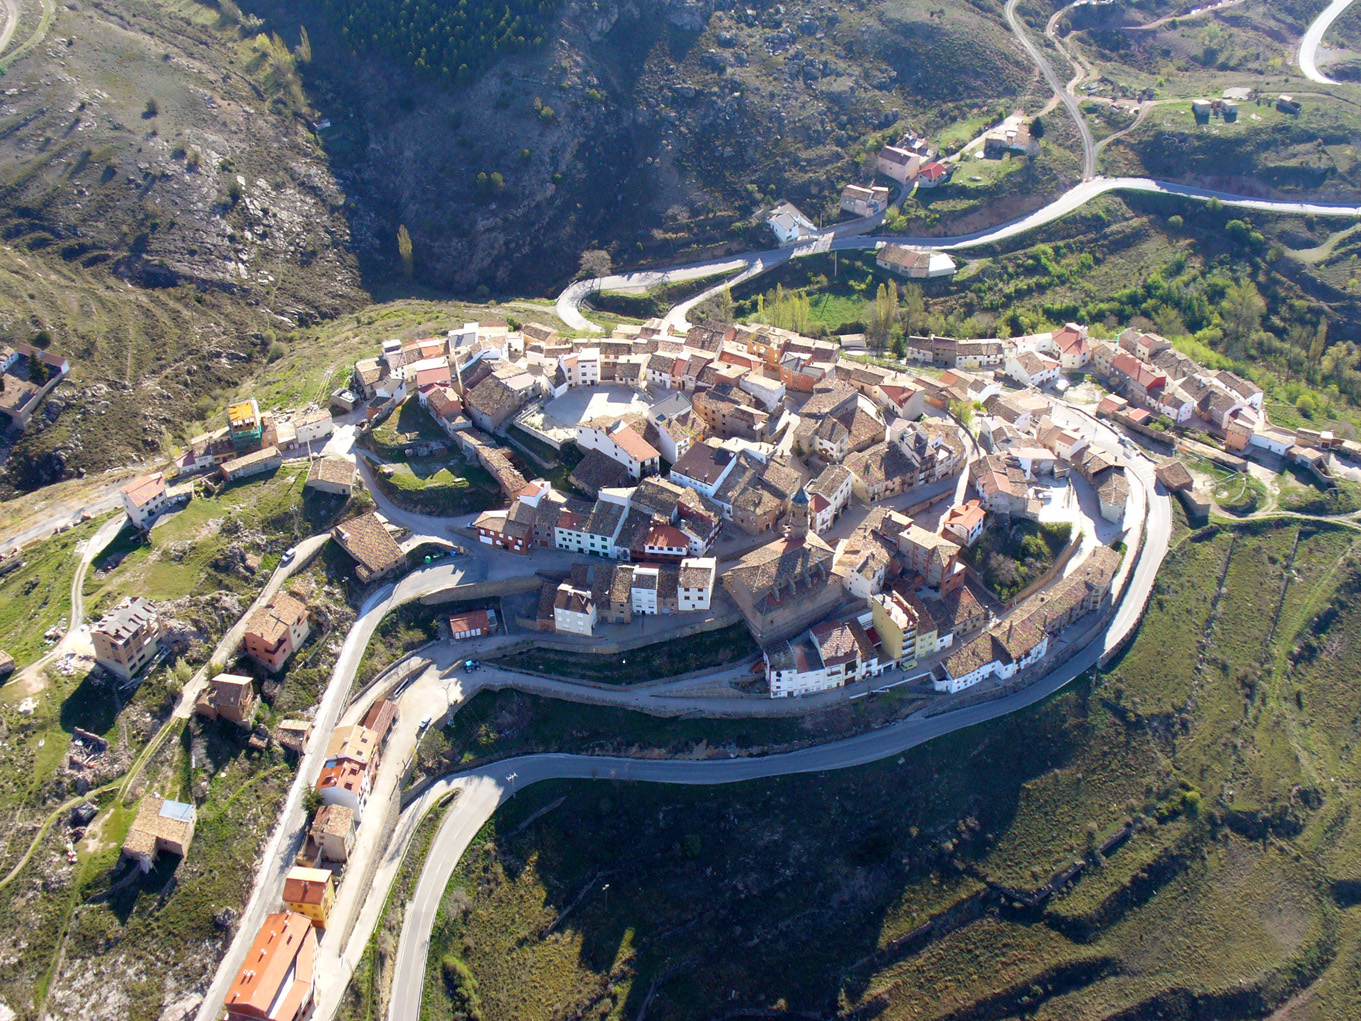 Vista aérea de Torrijas (fuente: https://www.territoriomedieval.com/listing/torrijas/).